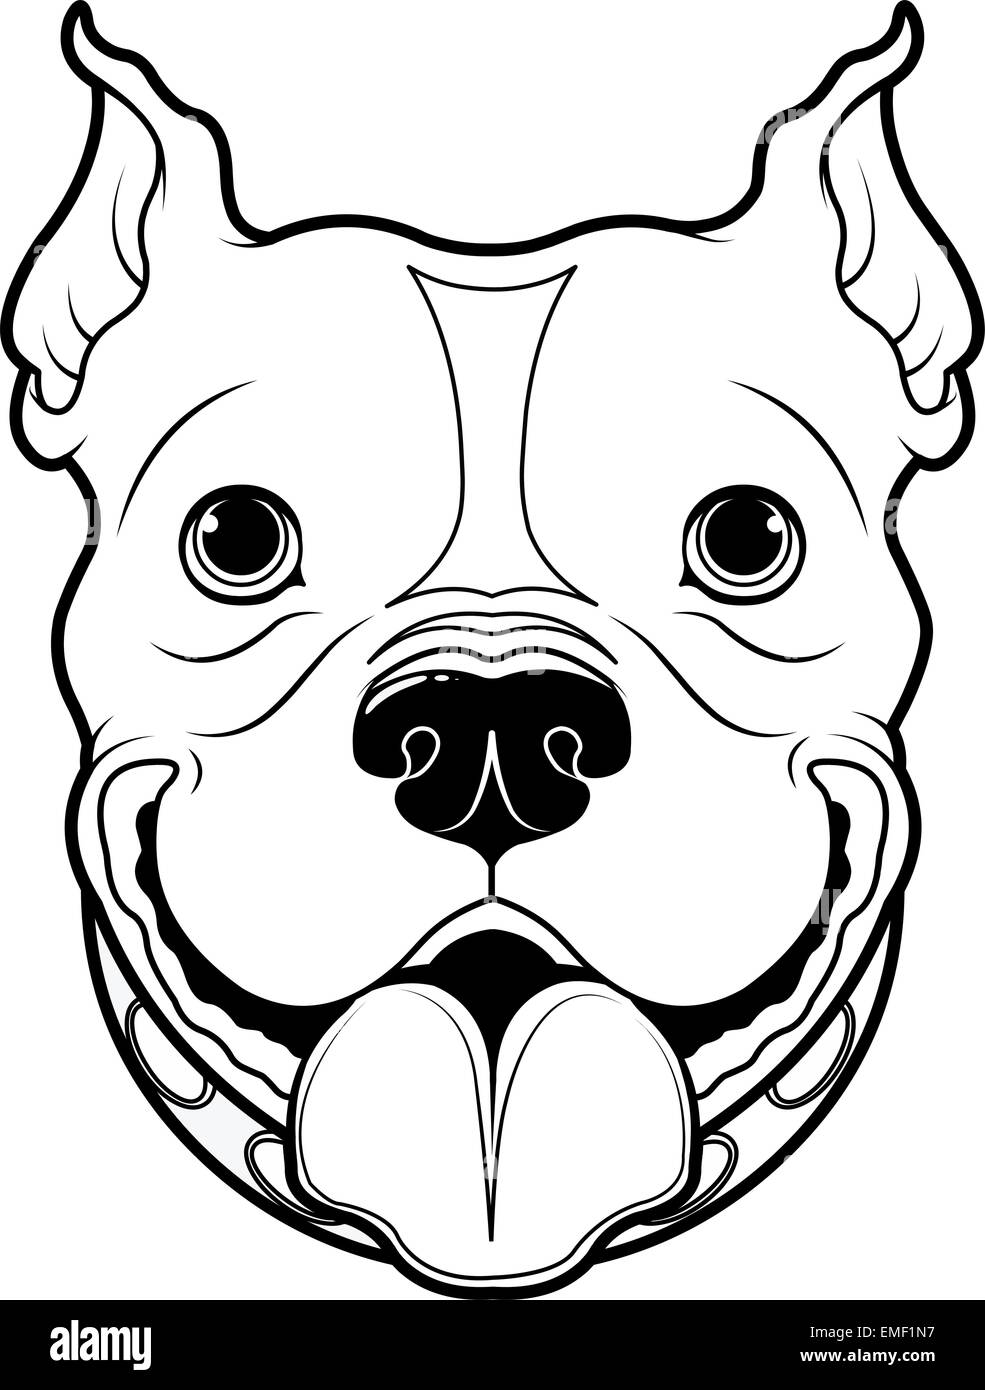 Cartoon bulldog Black and White Stock Photos & Images - Alamy